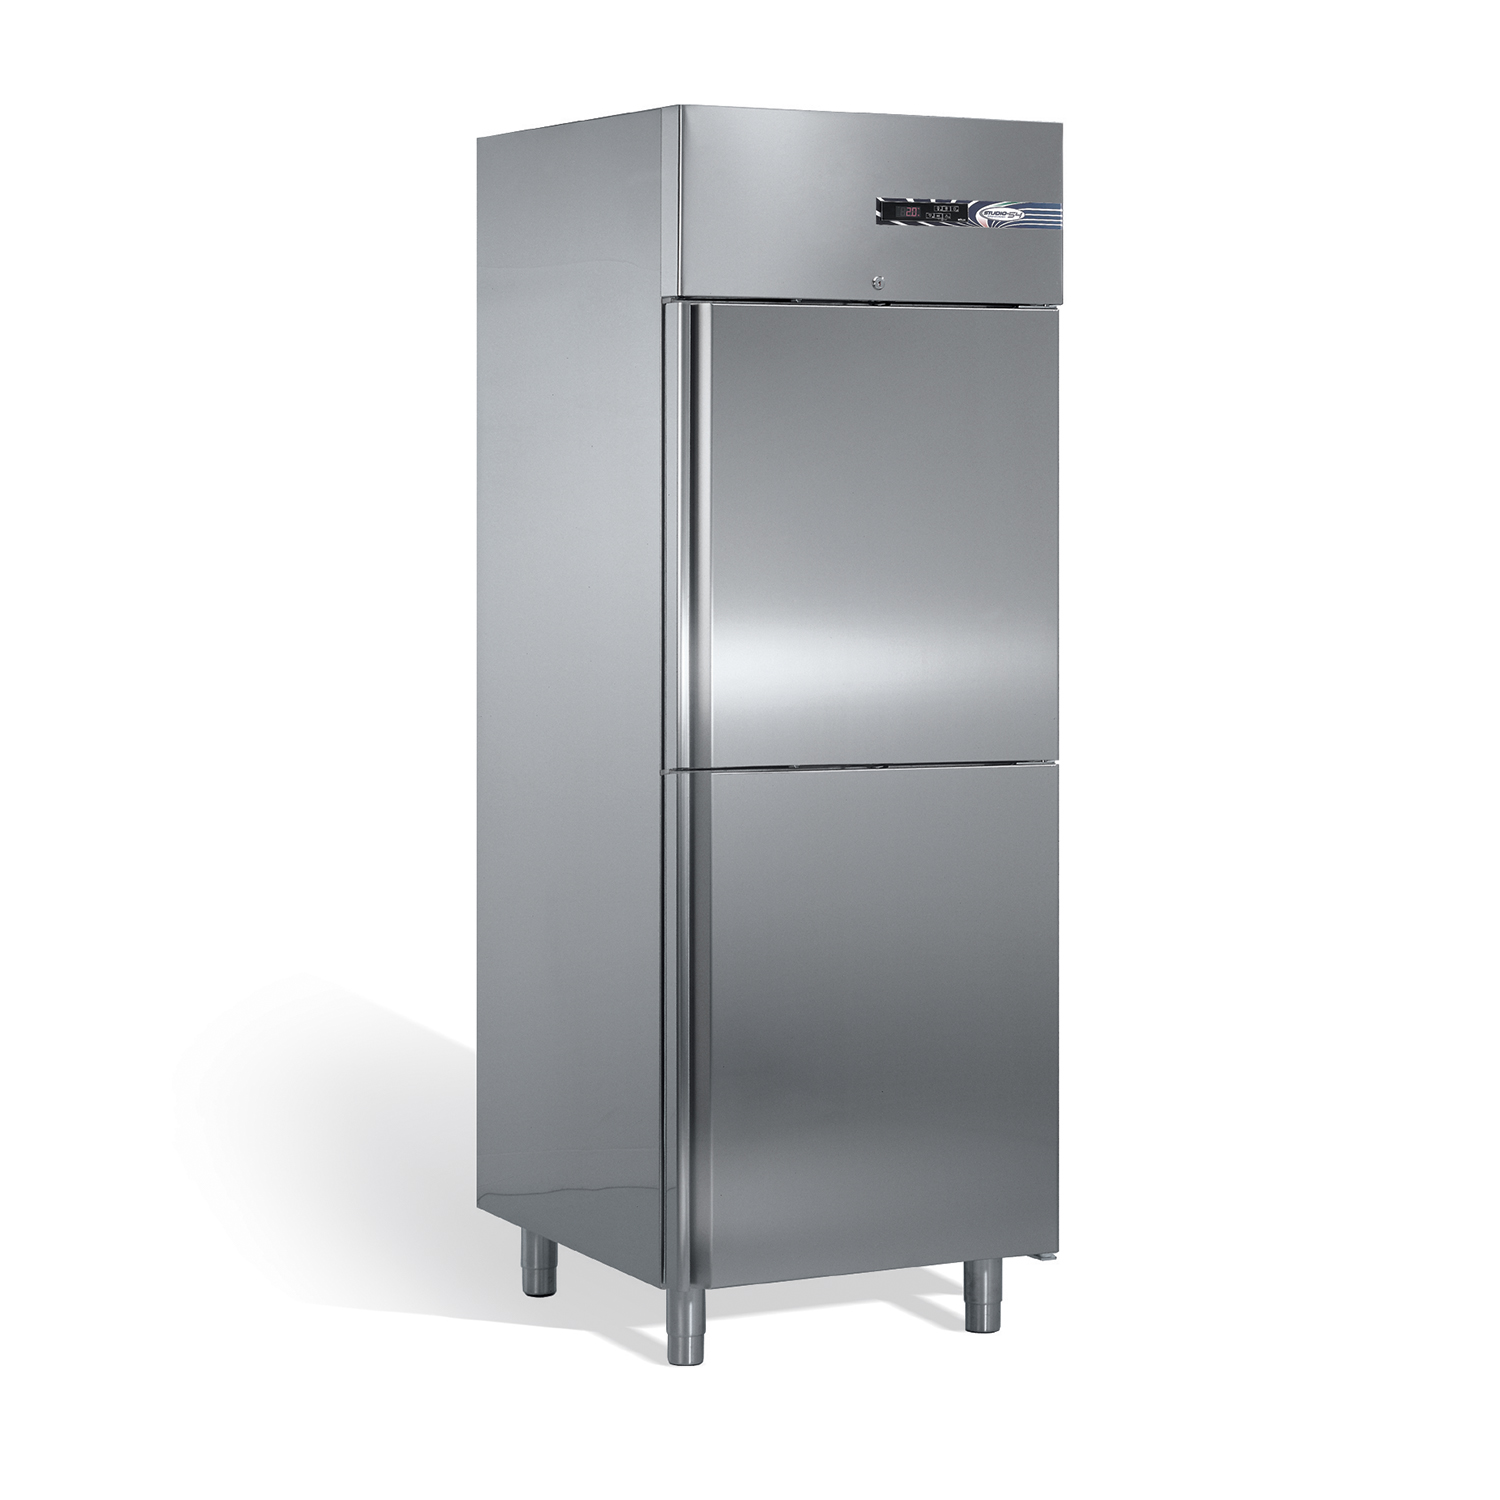 Gastro-Tiefkühlschrank mit Halbtüren OASIS TOP LINE GREEN 700 Liter